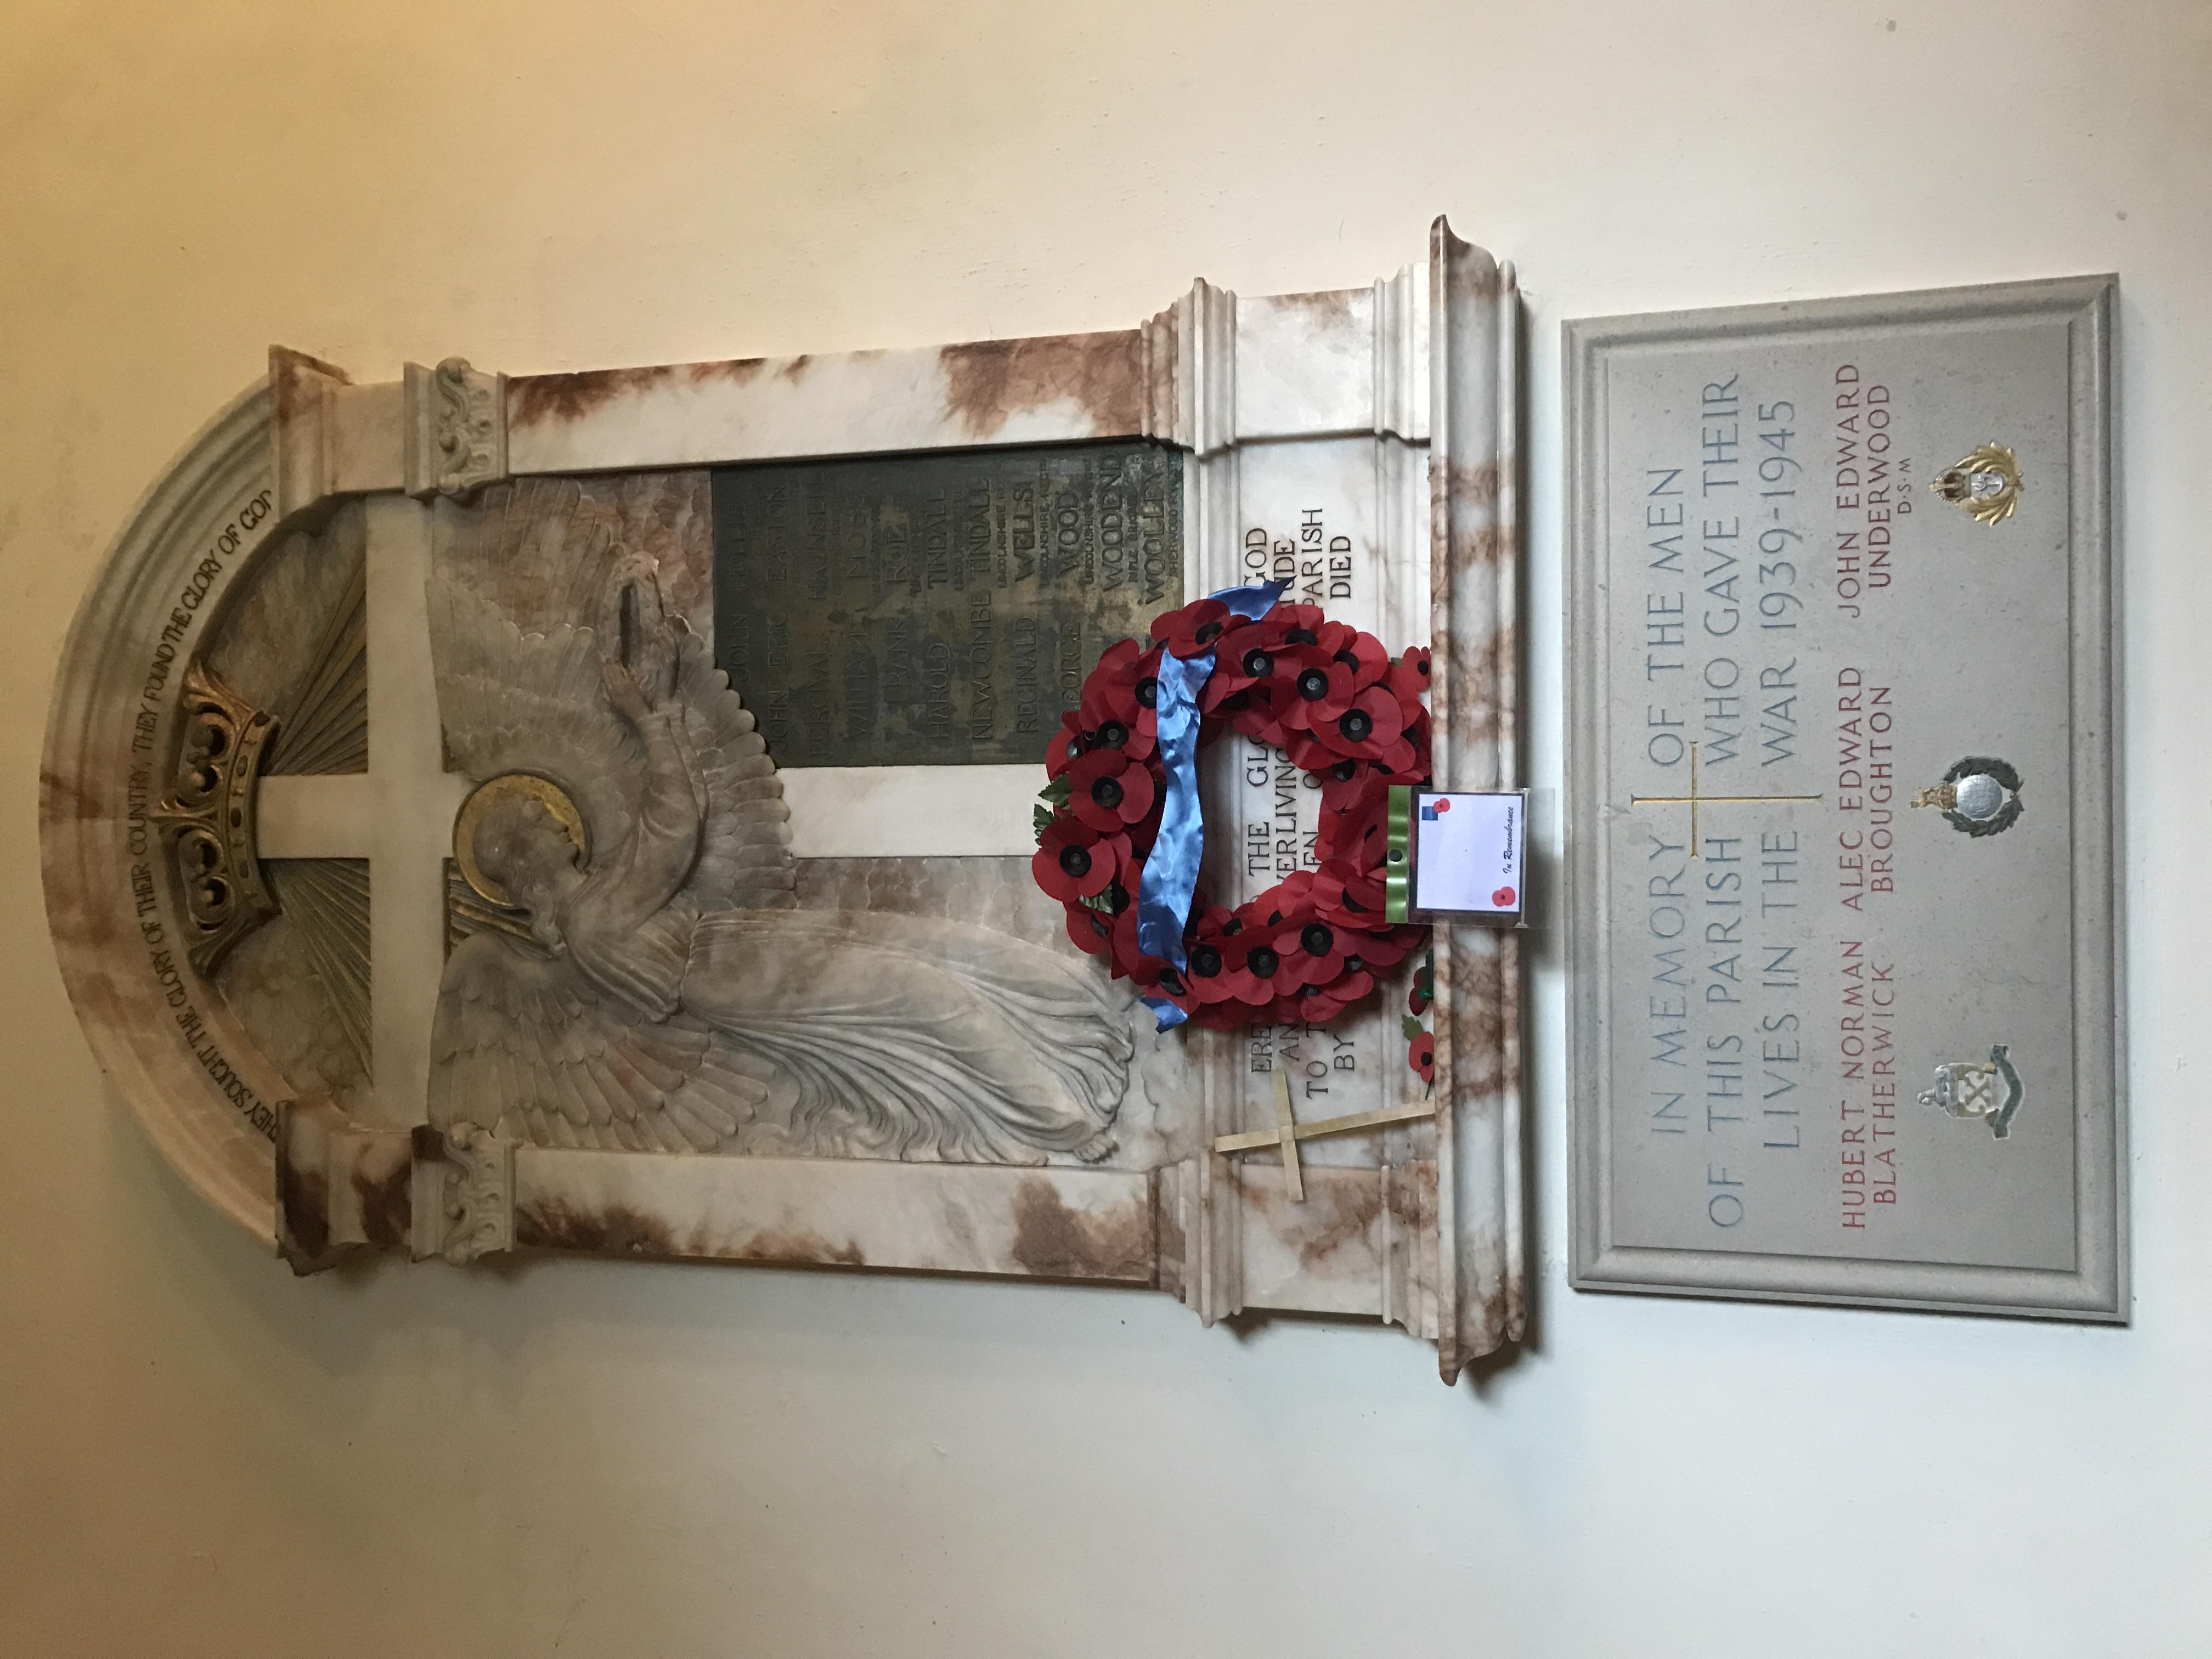 WW1 and WW2 memorial inside all saints church